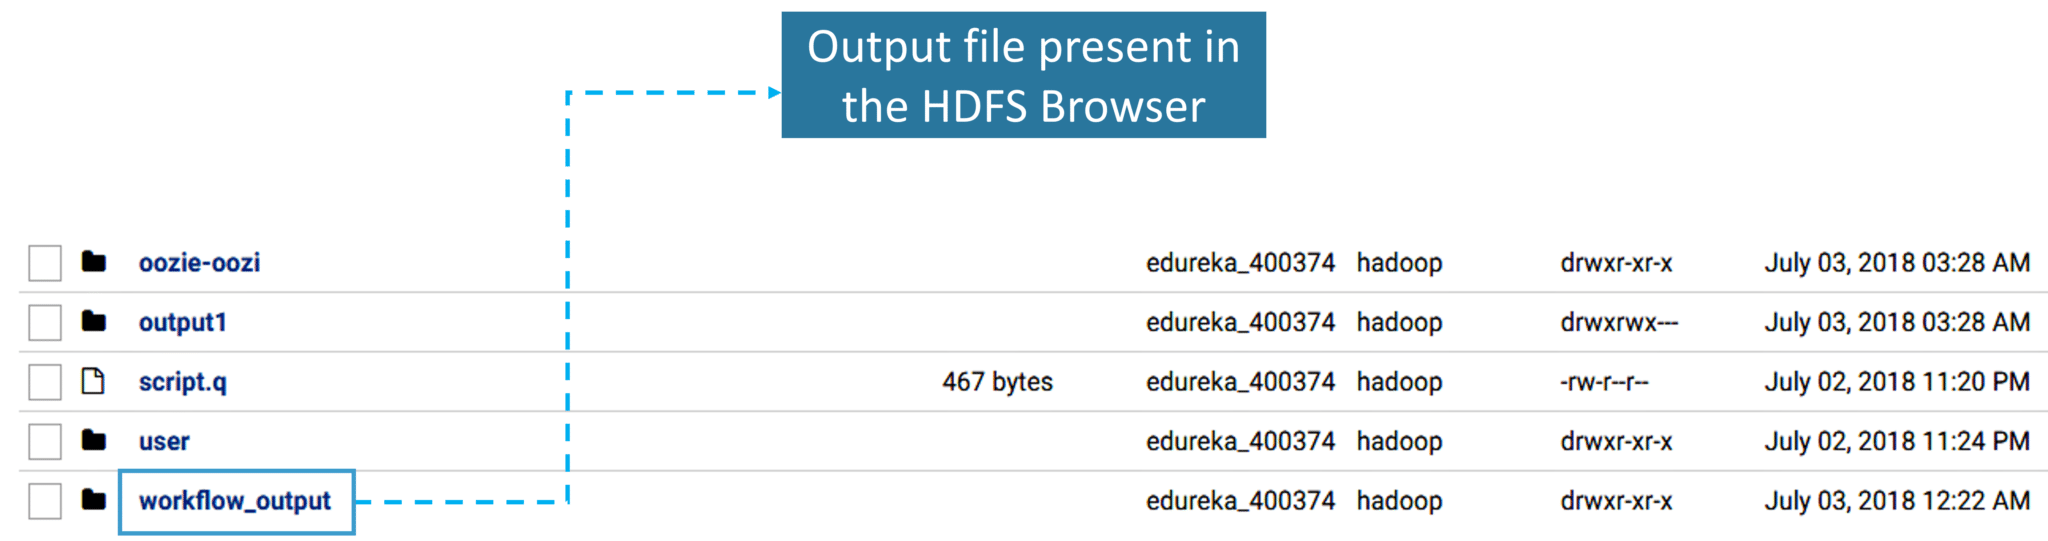 output file of the HDFS browser-Cloudera Hadoop-Edureka